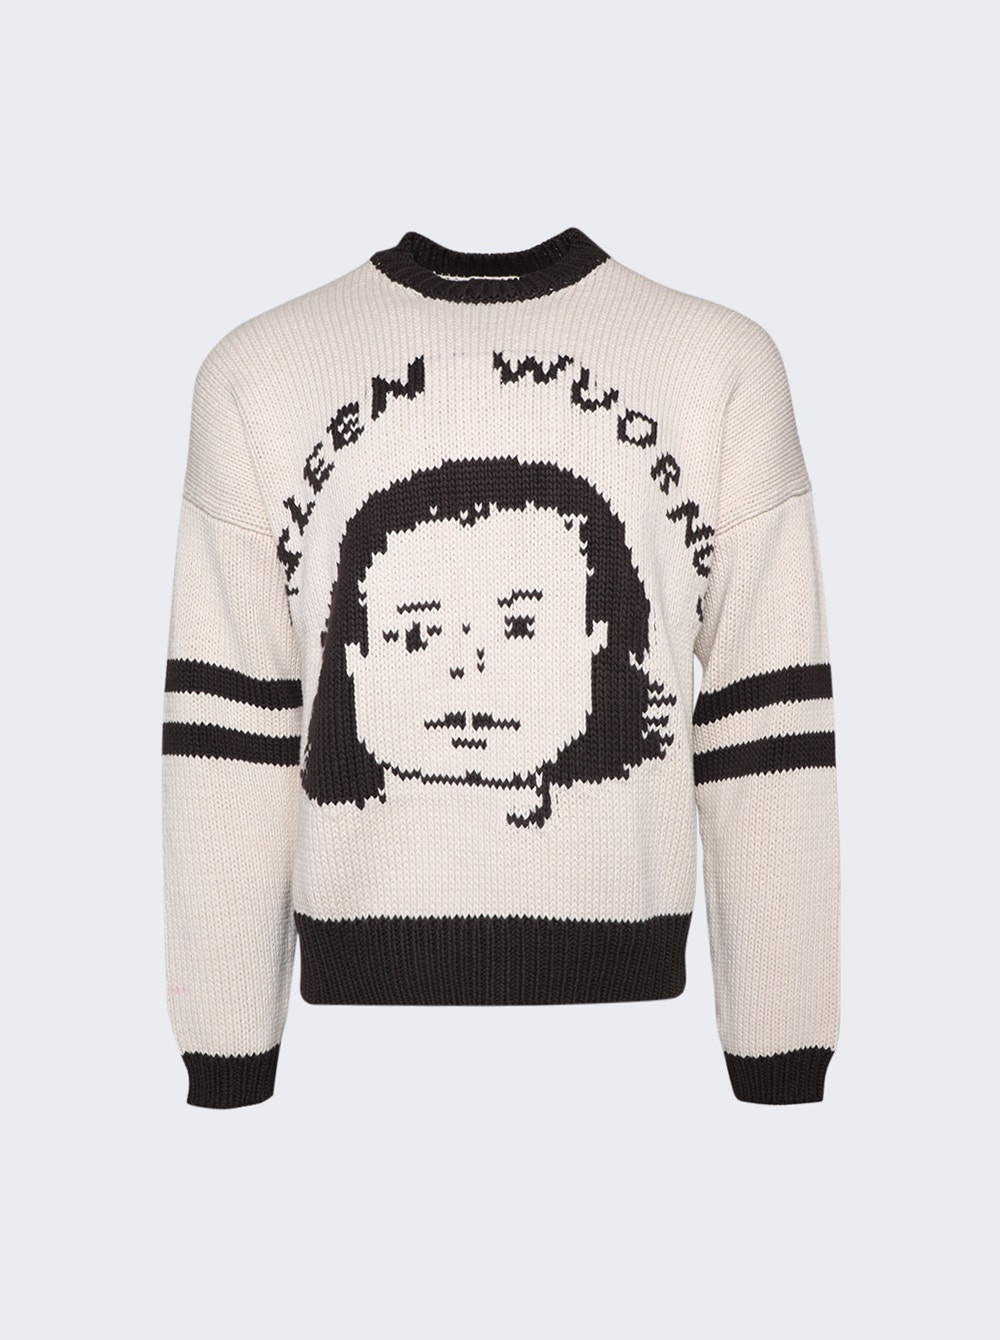 Aileen Wuornos Sweater Cream - 1